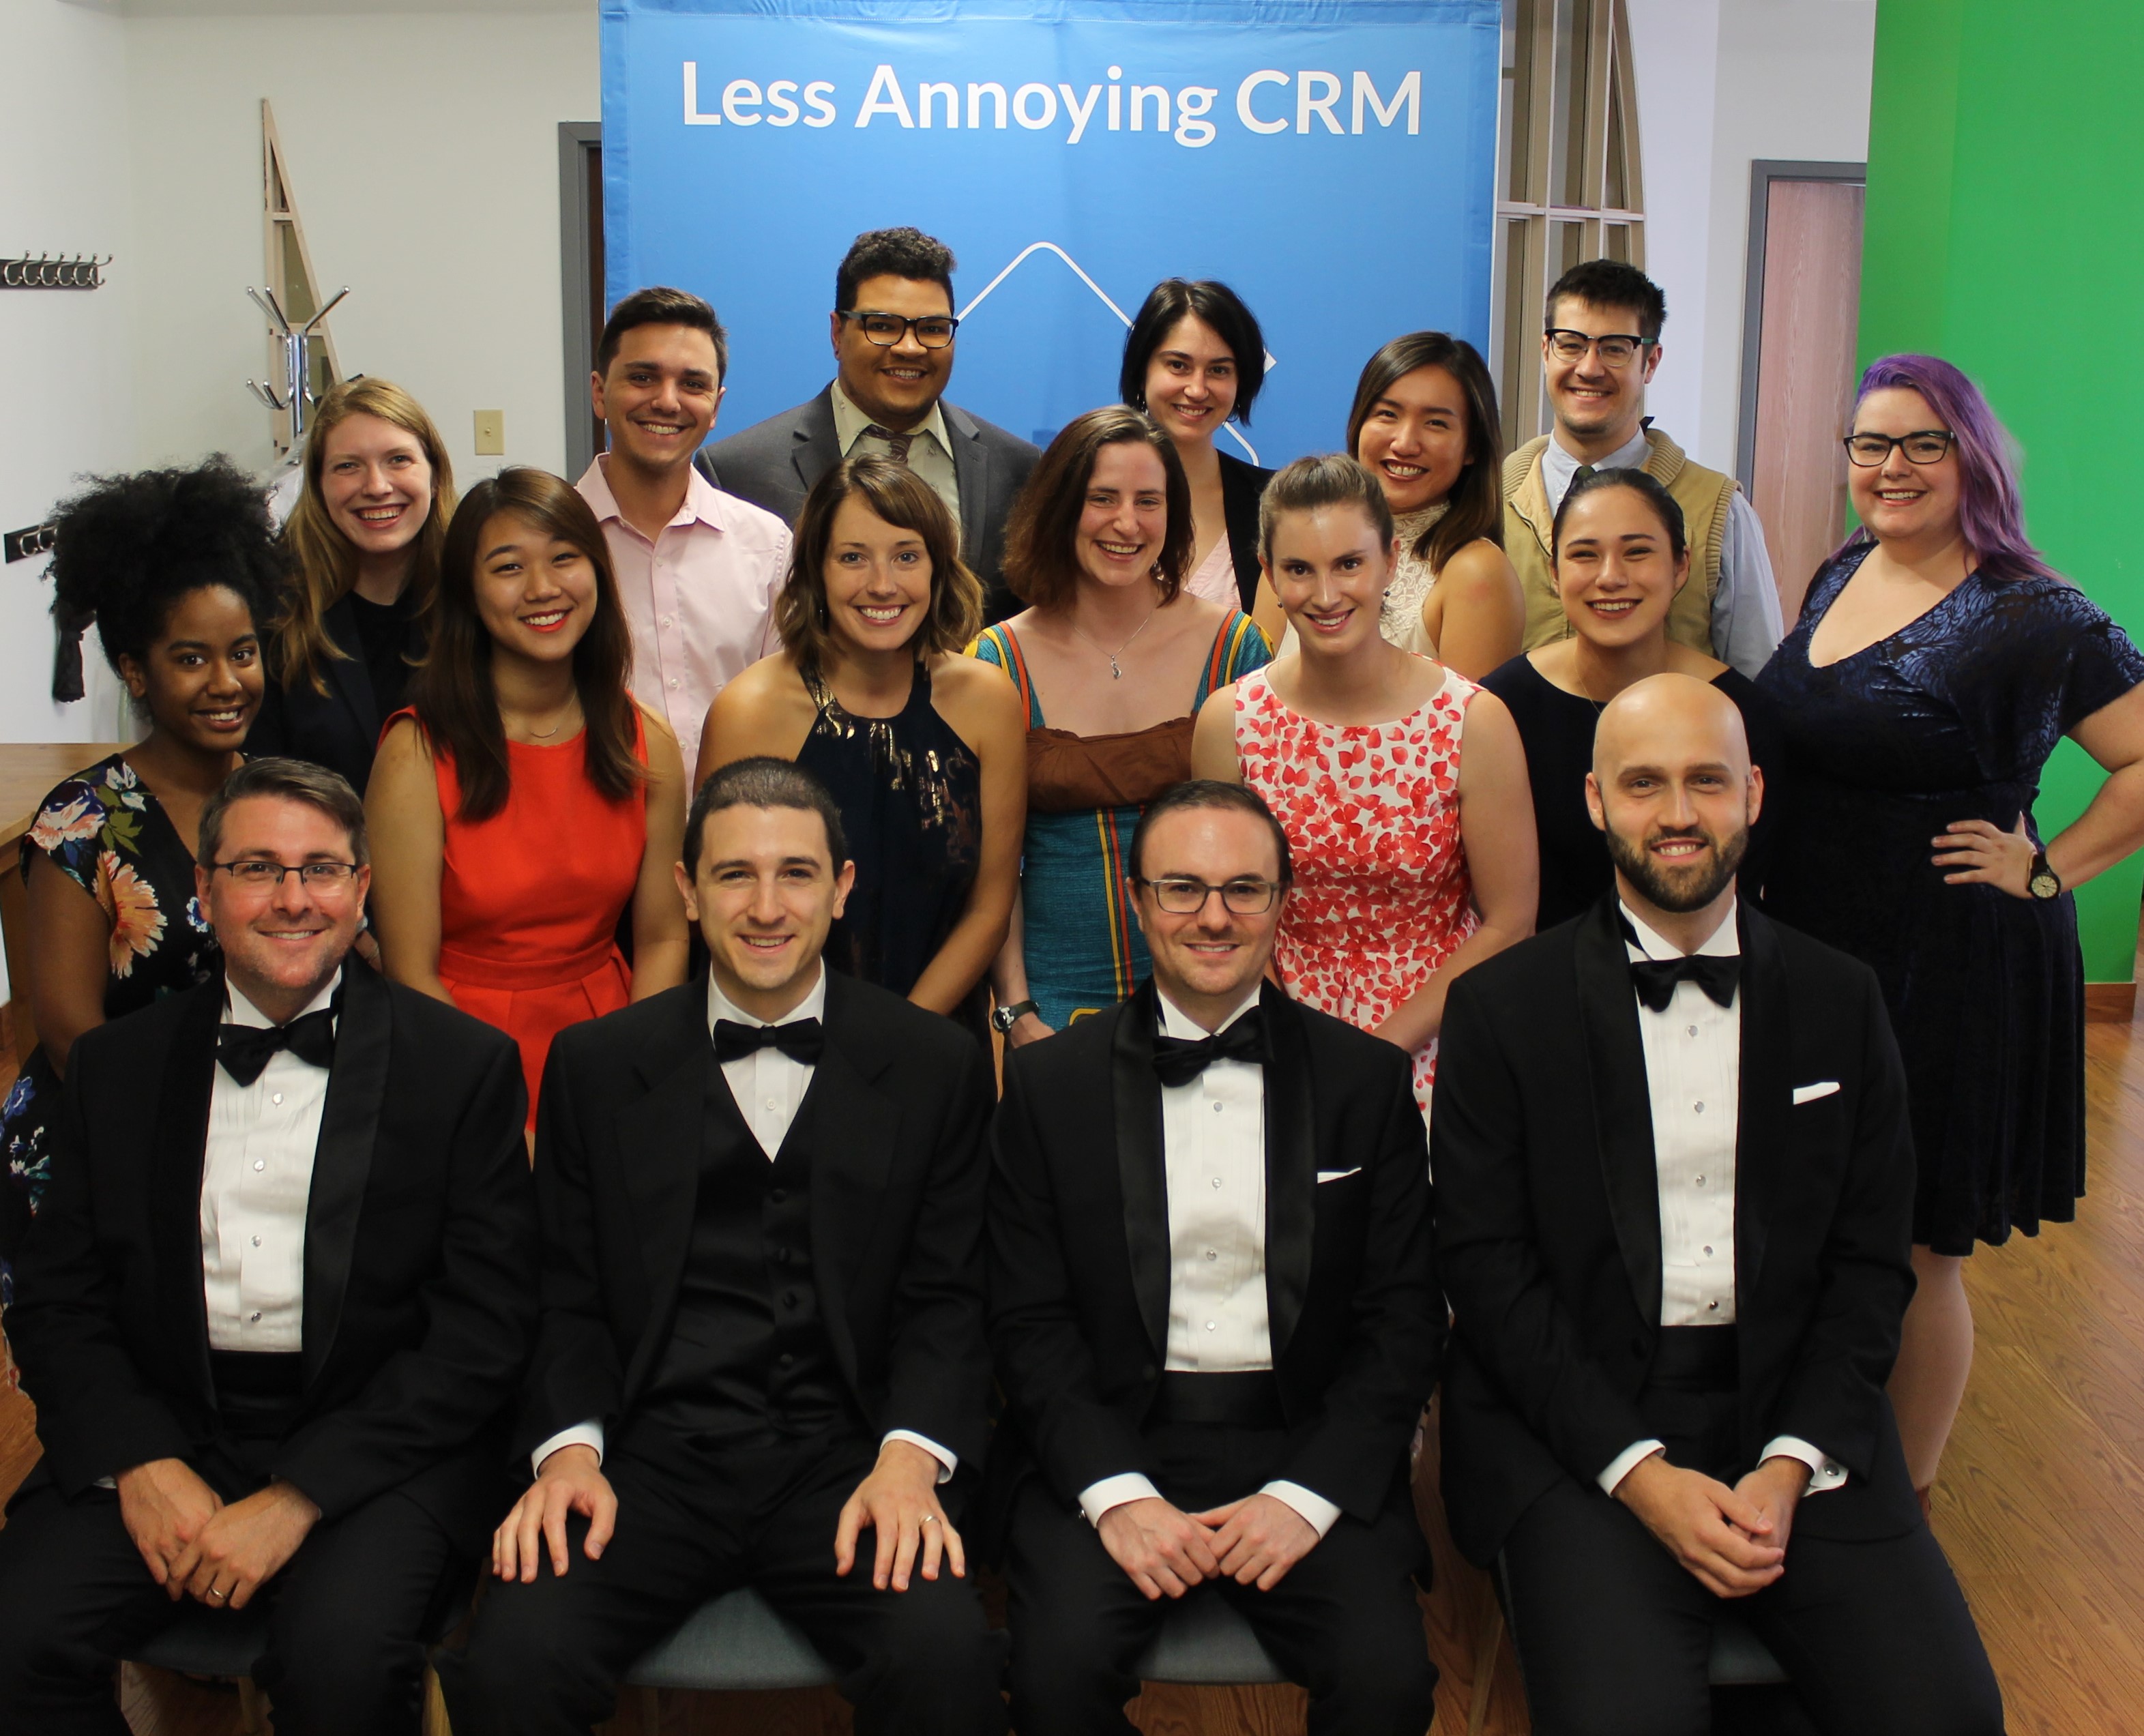 Less Annoying CRM team